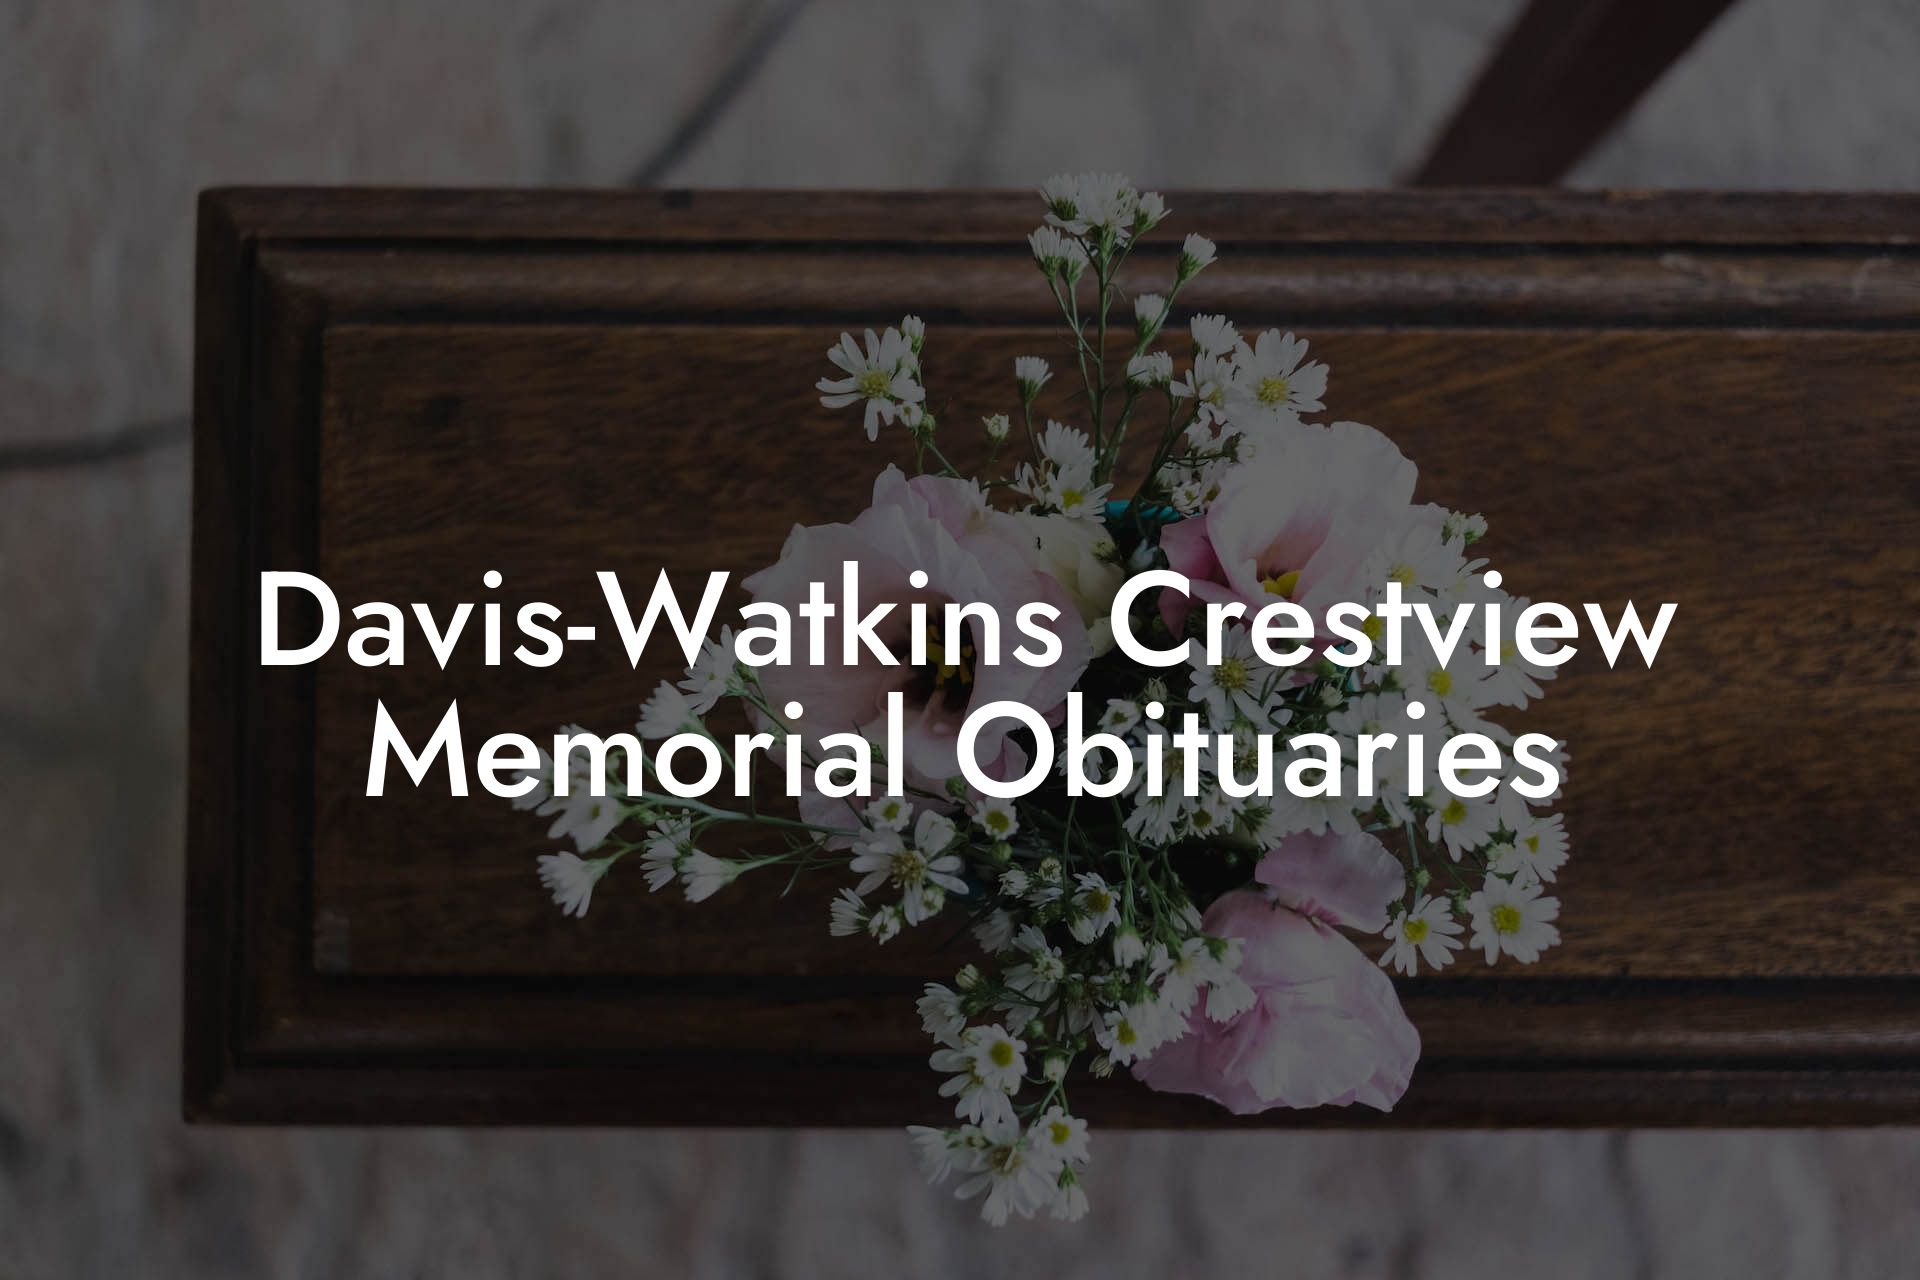 Davis-Watkins Crestview Memorial Obituaries